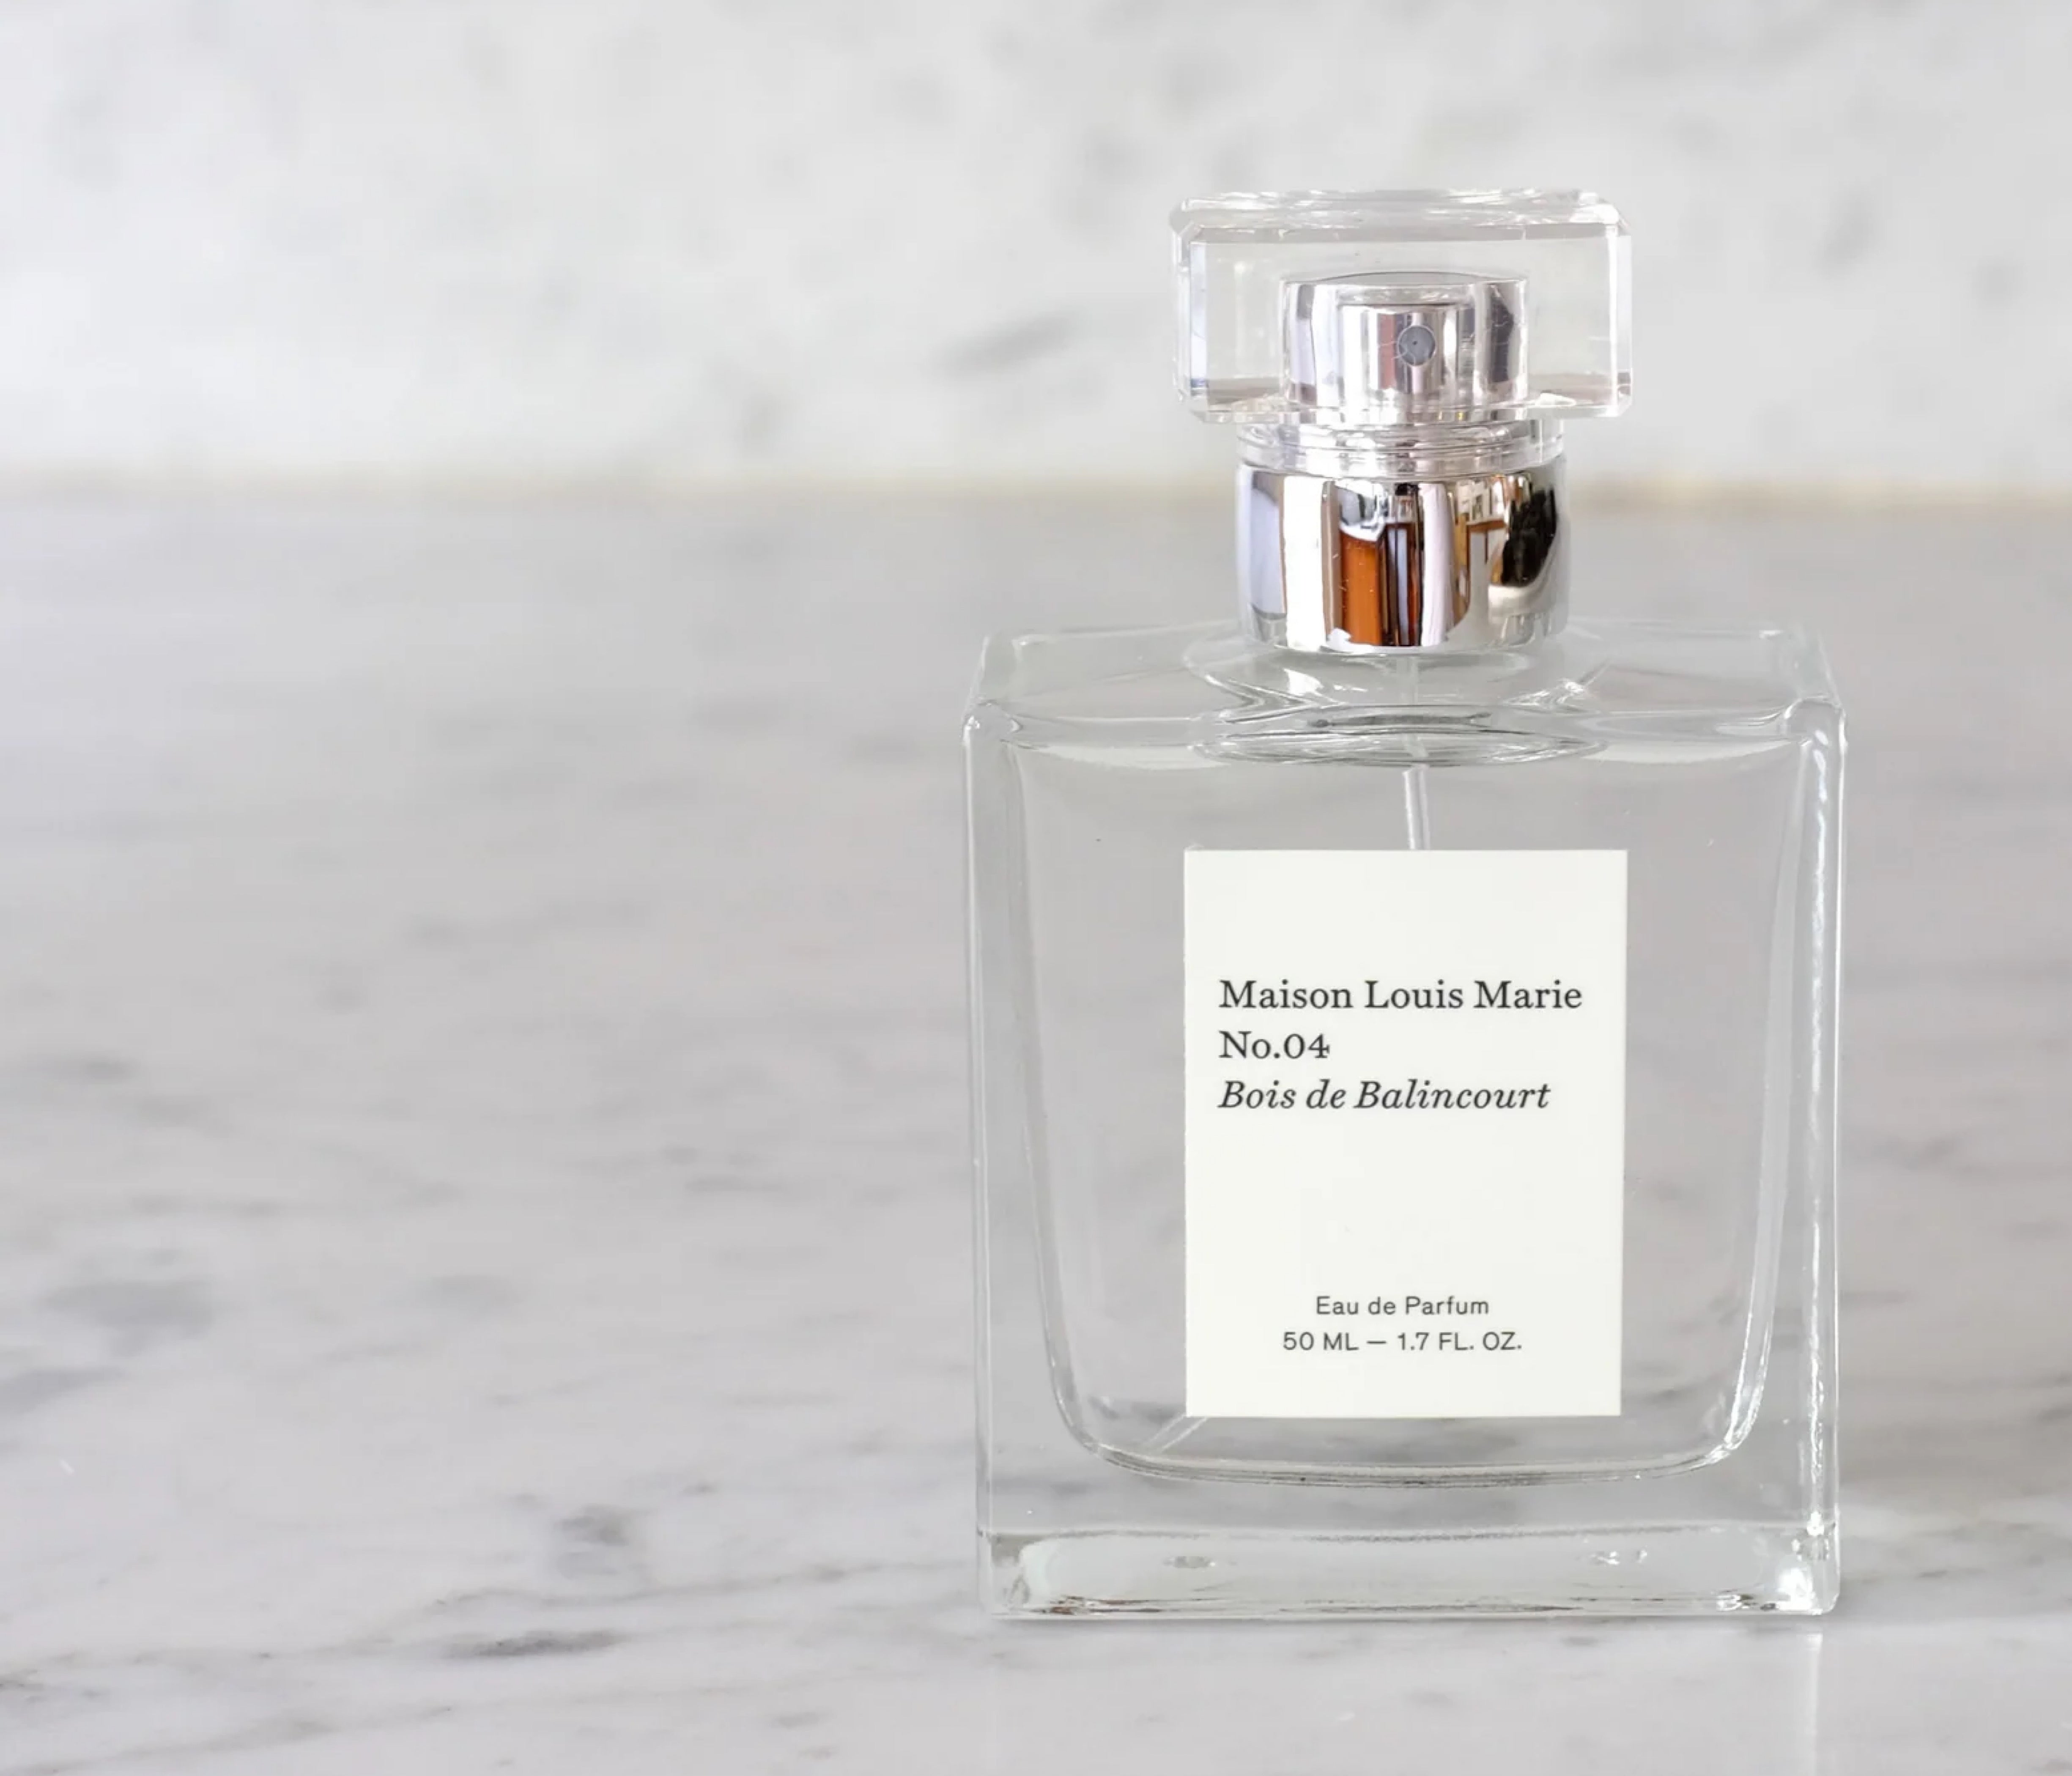 Maison Louis Maire :: Perfume Oil No. 12 Bousval — Lake